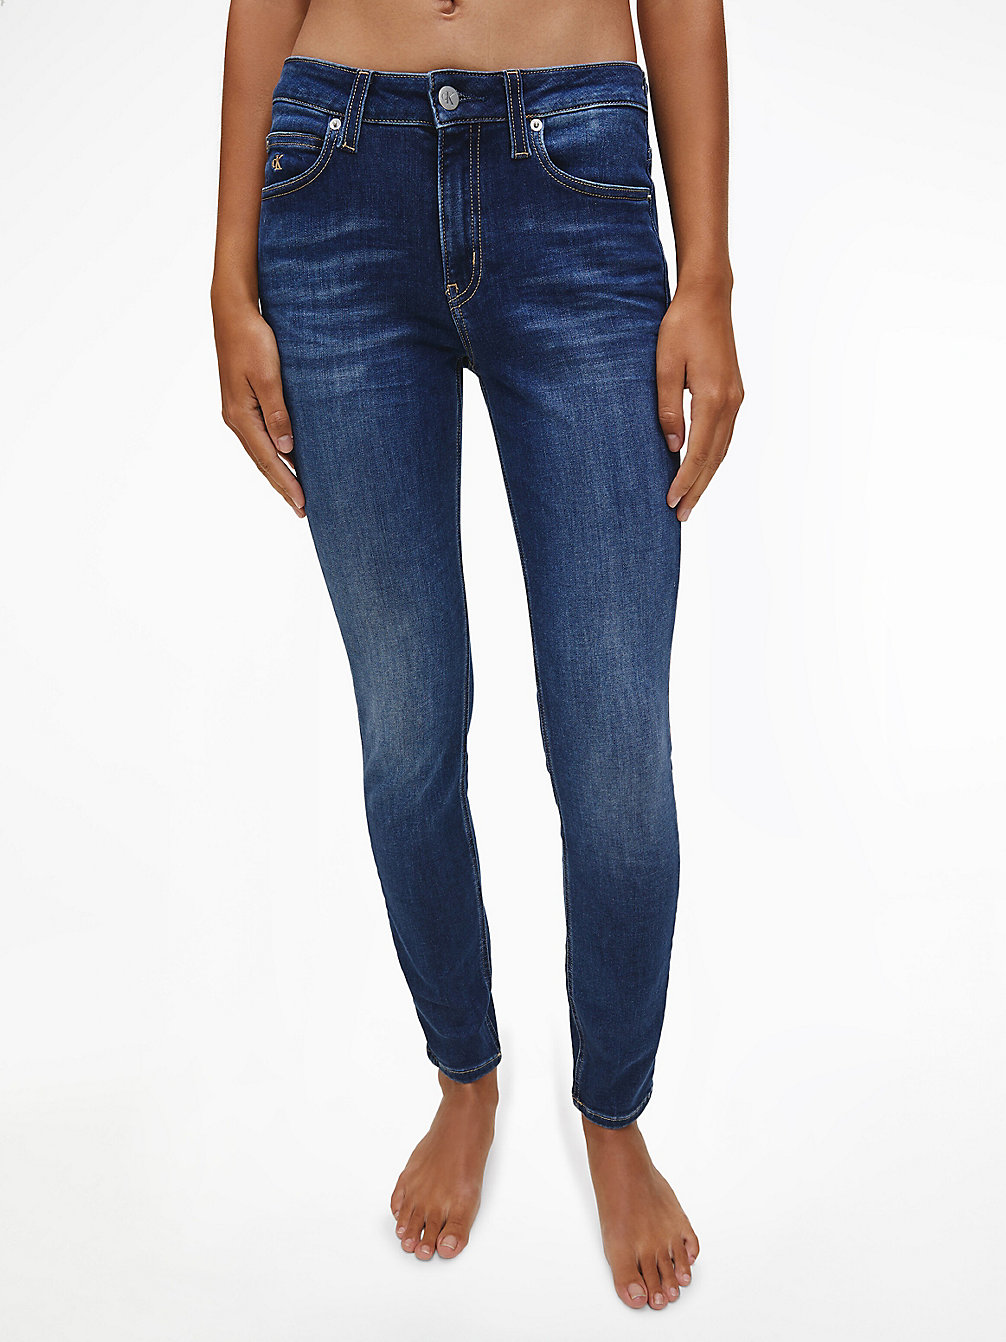 ZZ001 MID BLUE Mid Rise Skinny Jeans undefined Damen Calvin Klein